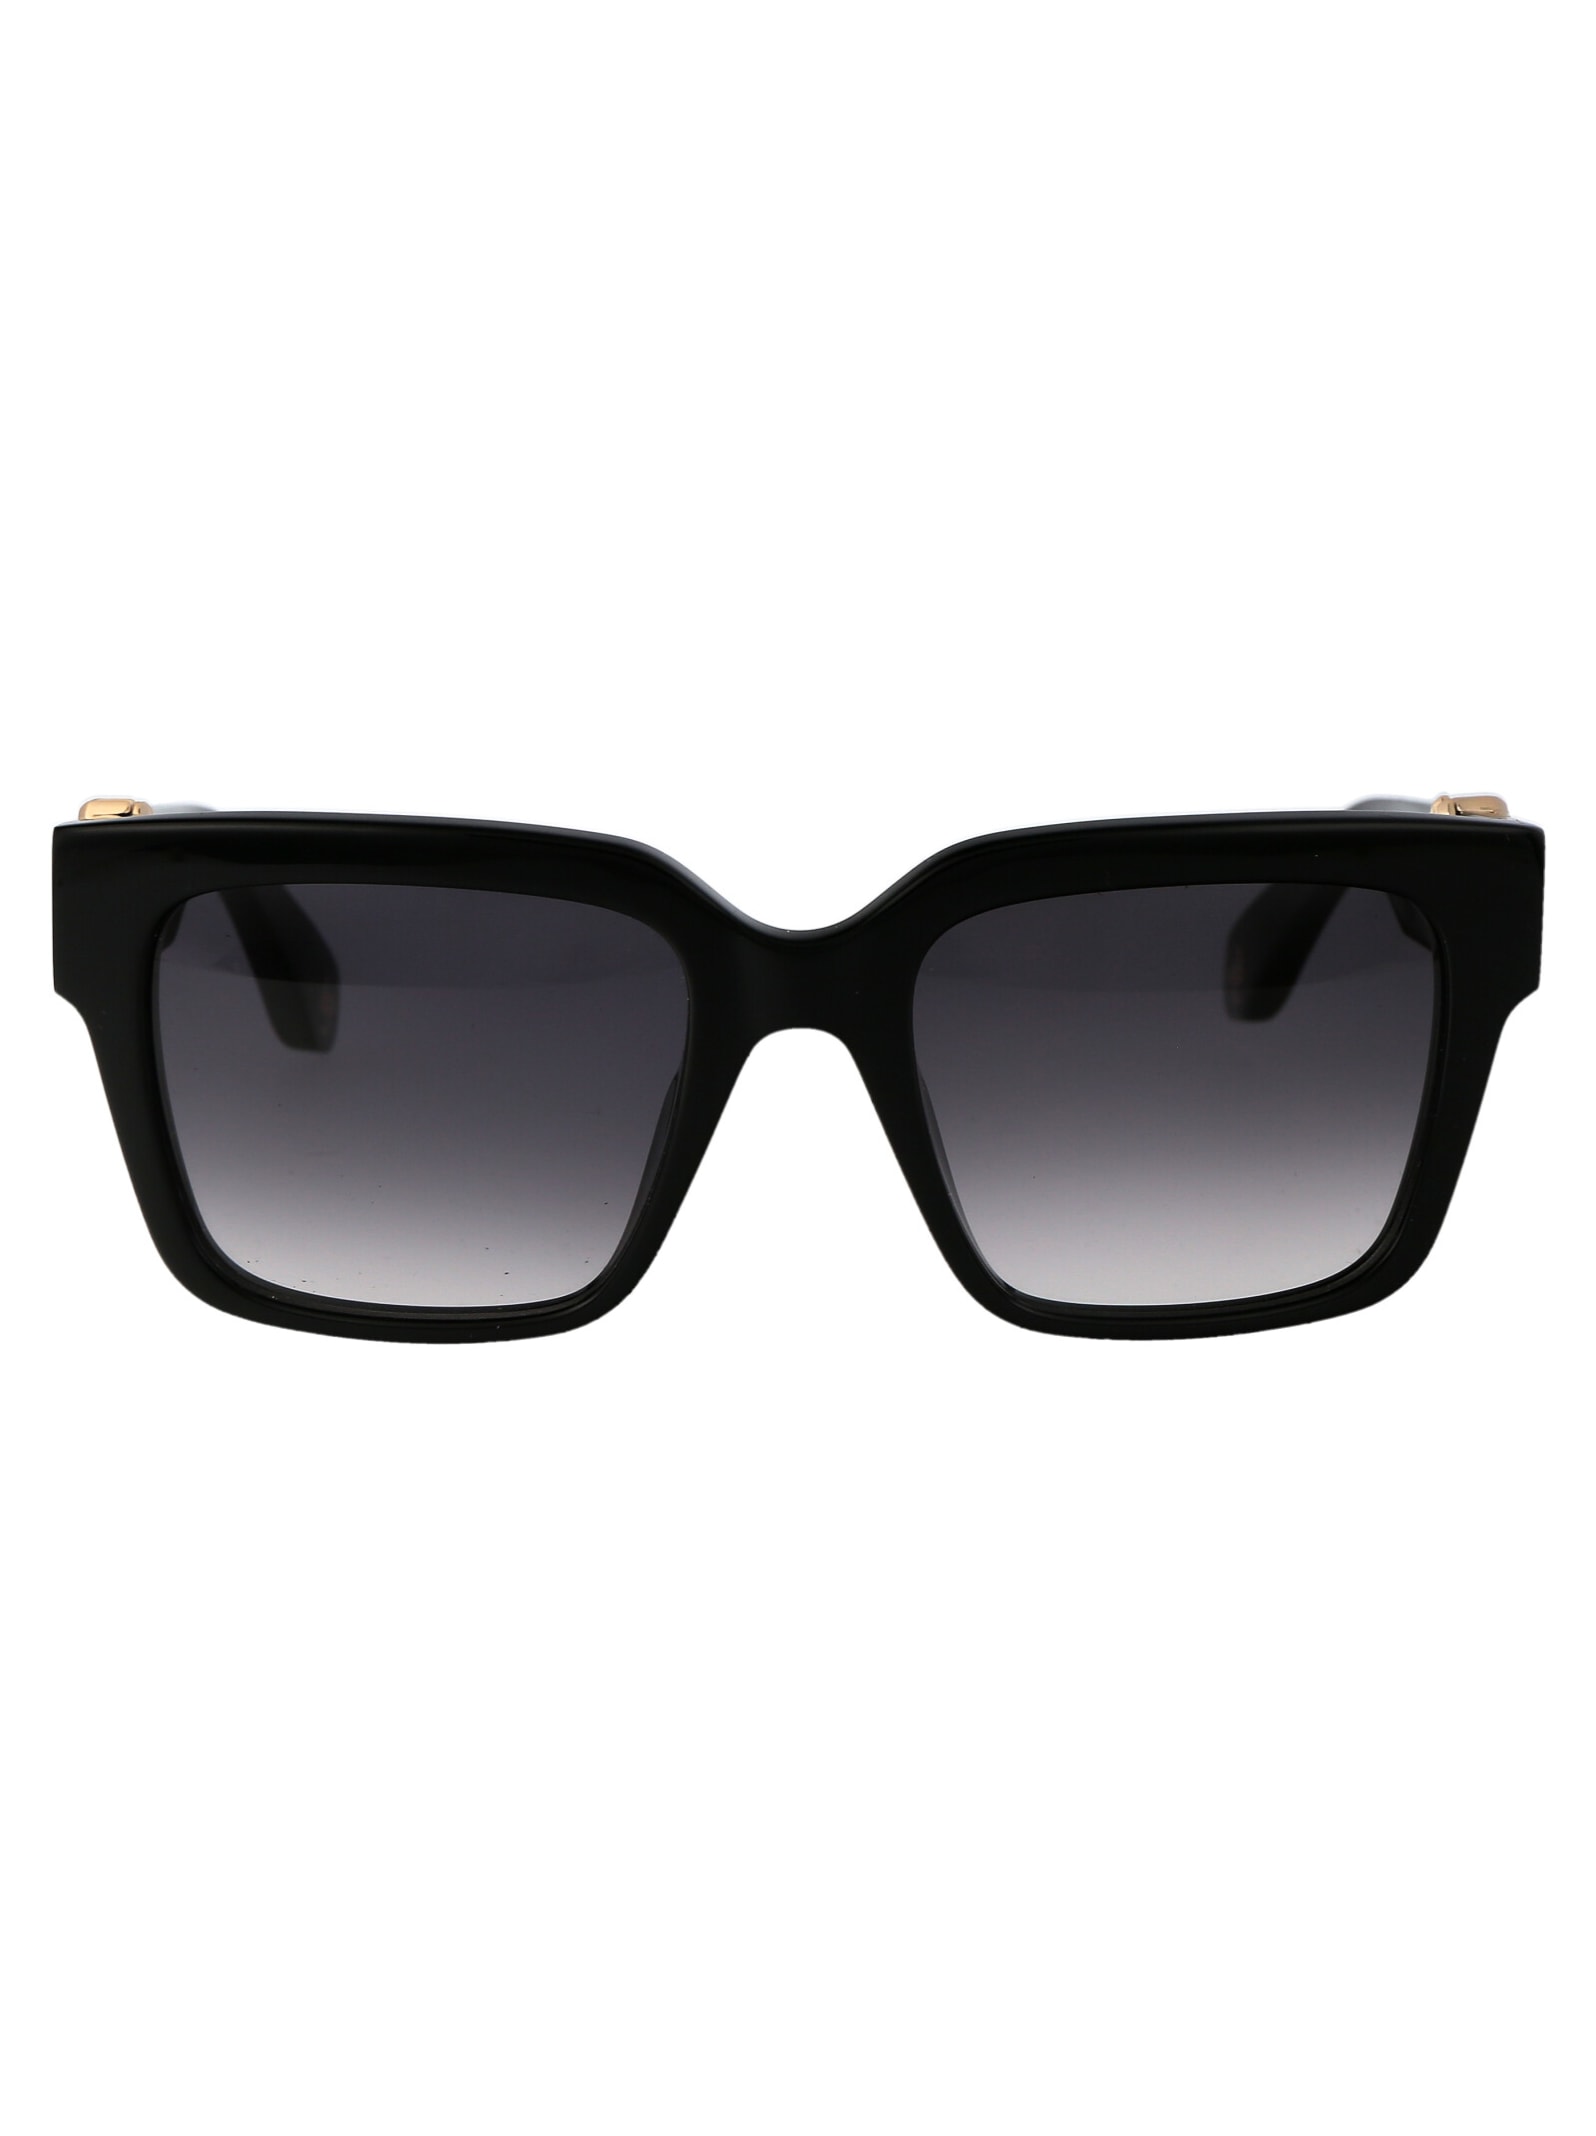 Roberto Cavalli Src040m Sunglasses In 0700 Black